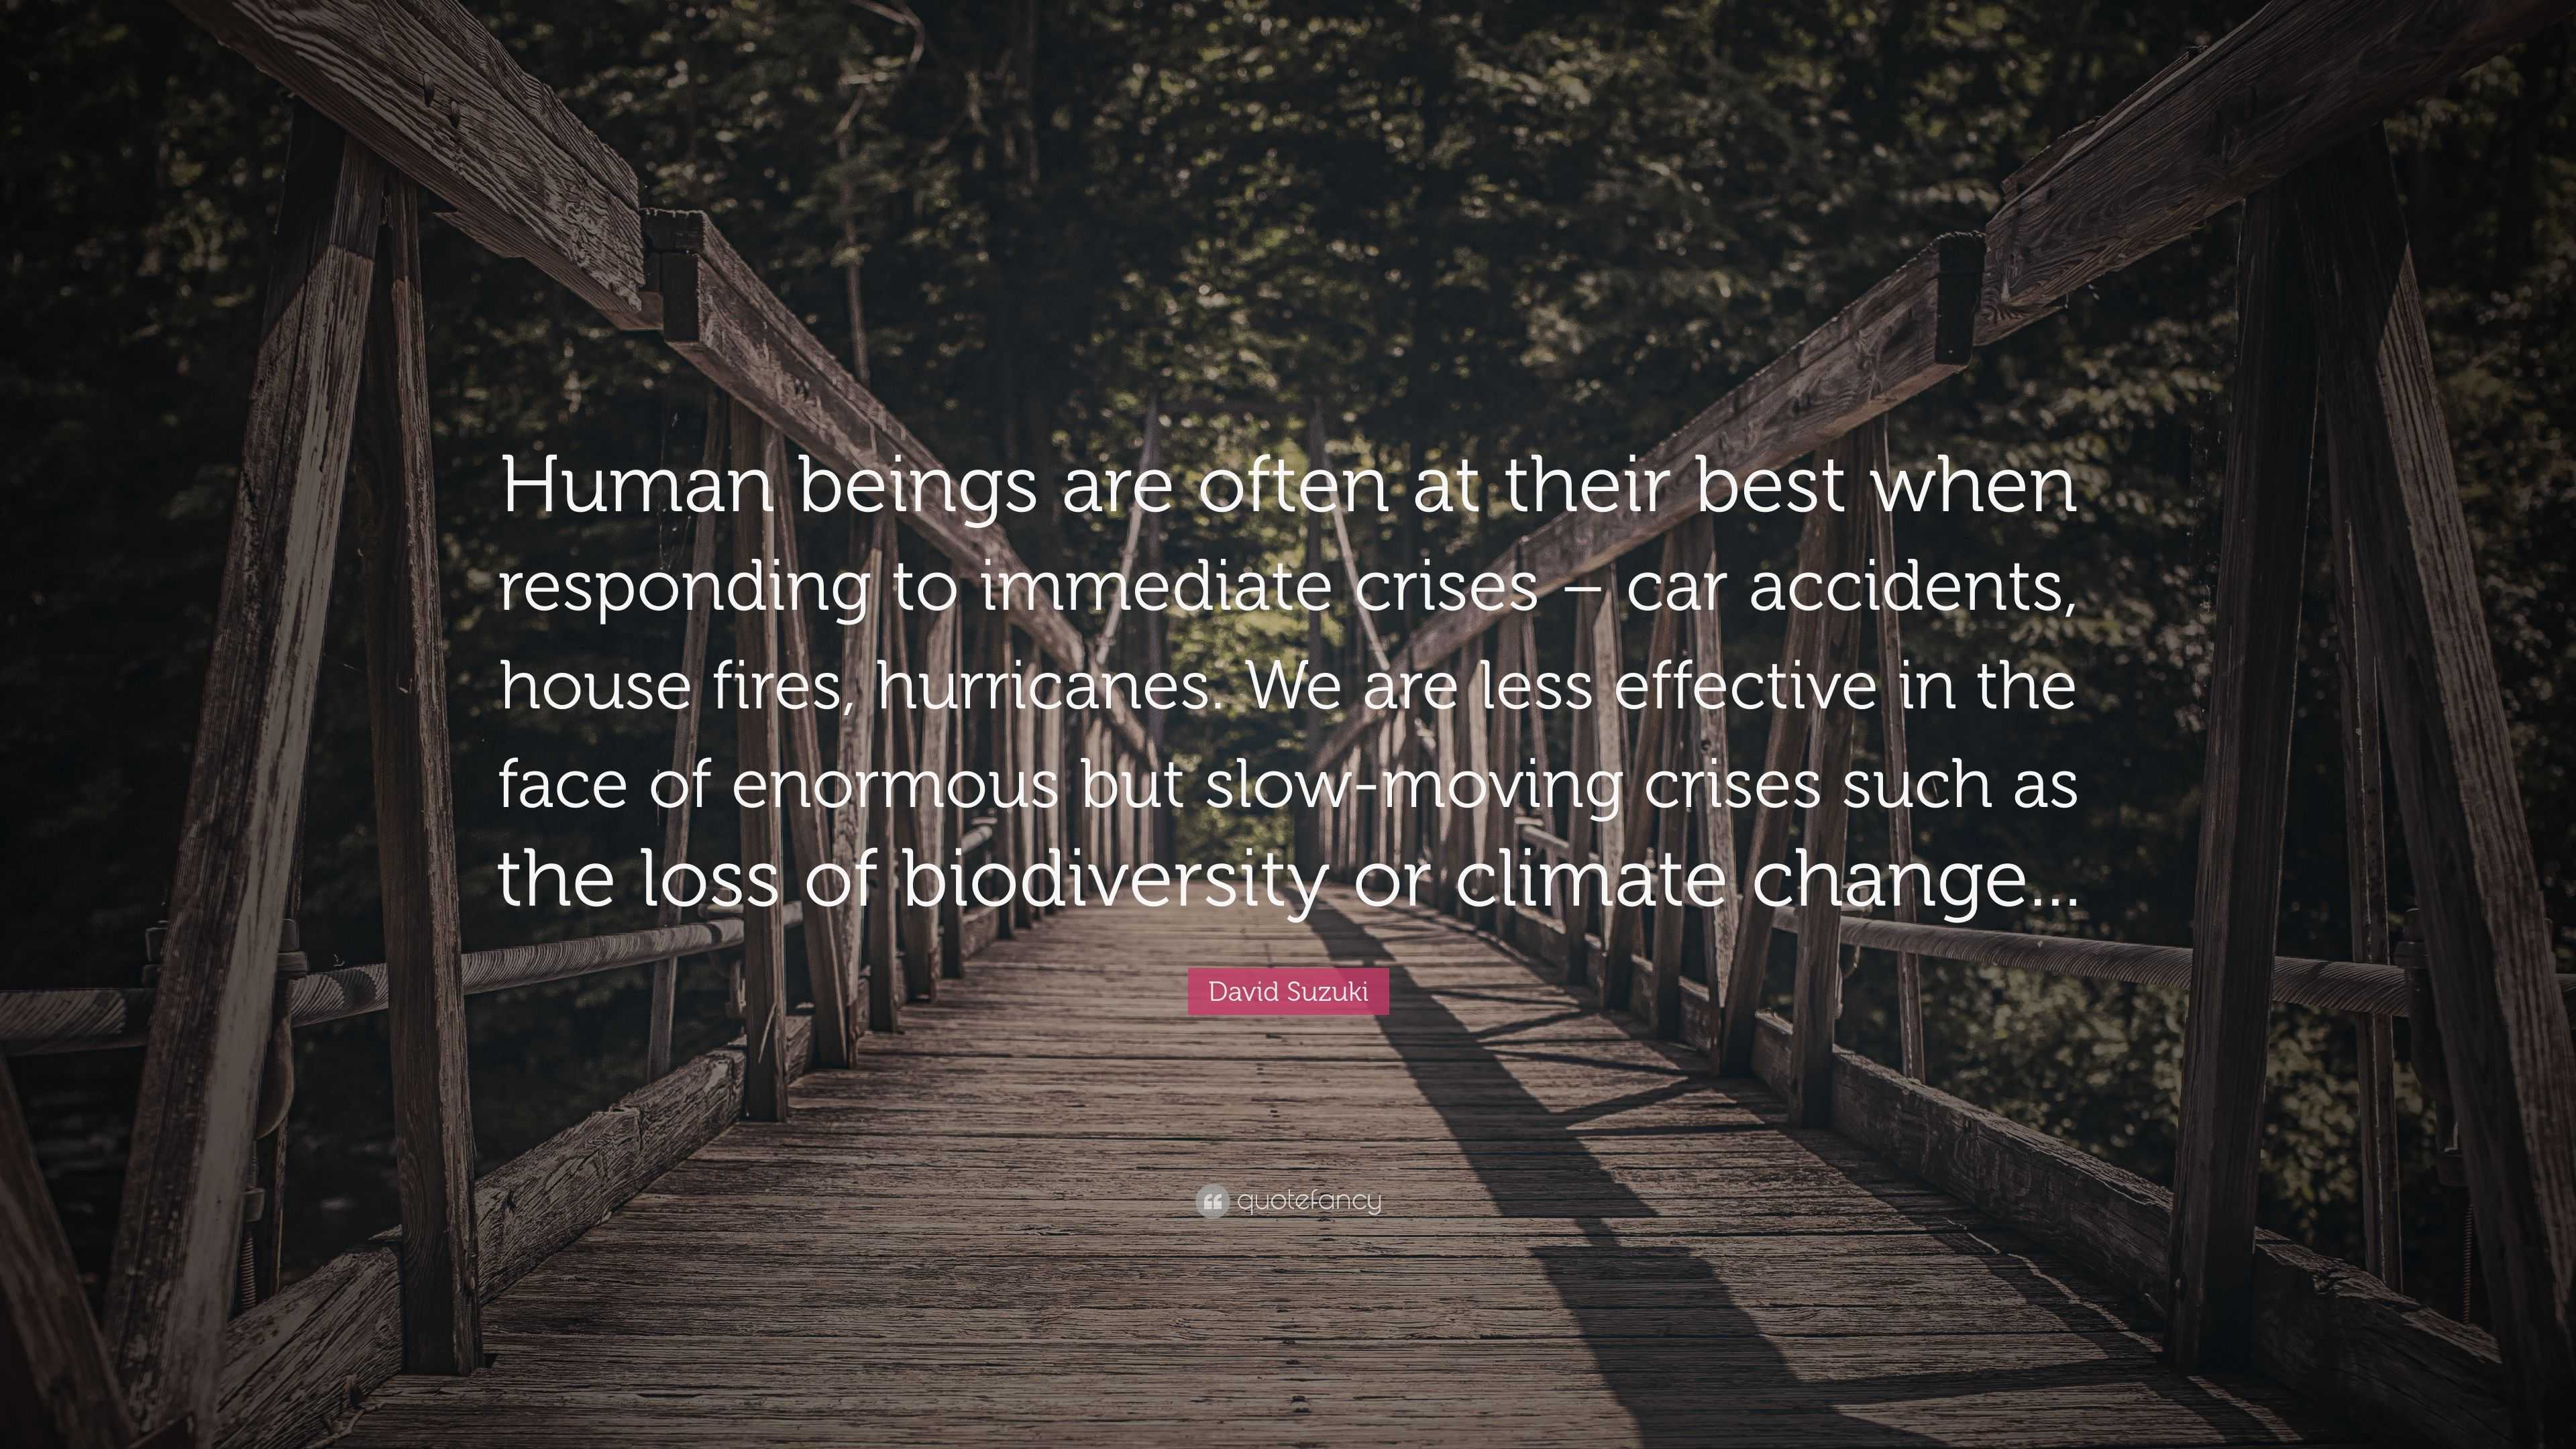 David Suzuki Quote: “Human beings are often at their best when ...